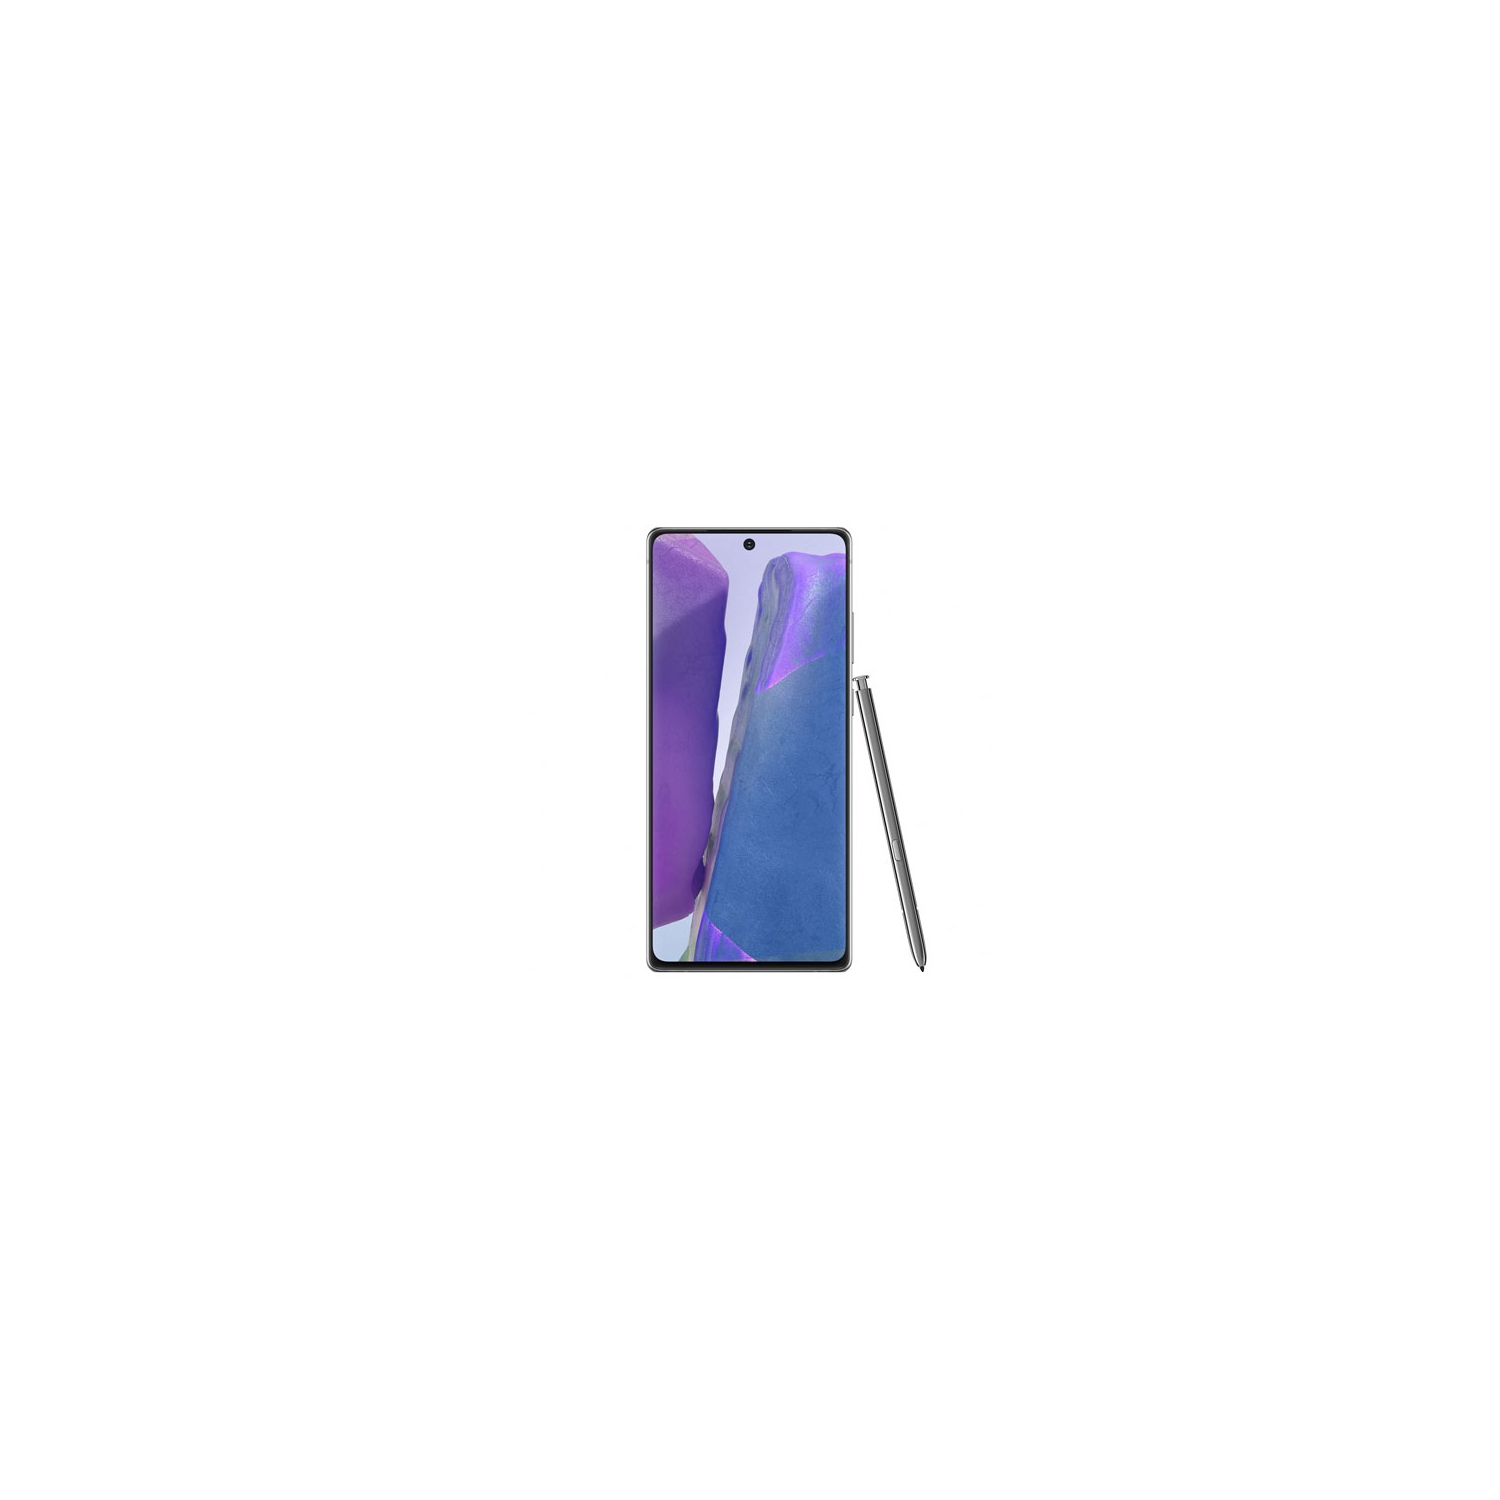 Samsung Galaxy Note 20 128GB Smartphone - Mystic Gray - Unlocked - Open Box